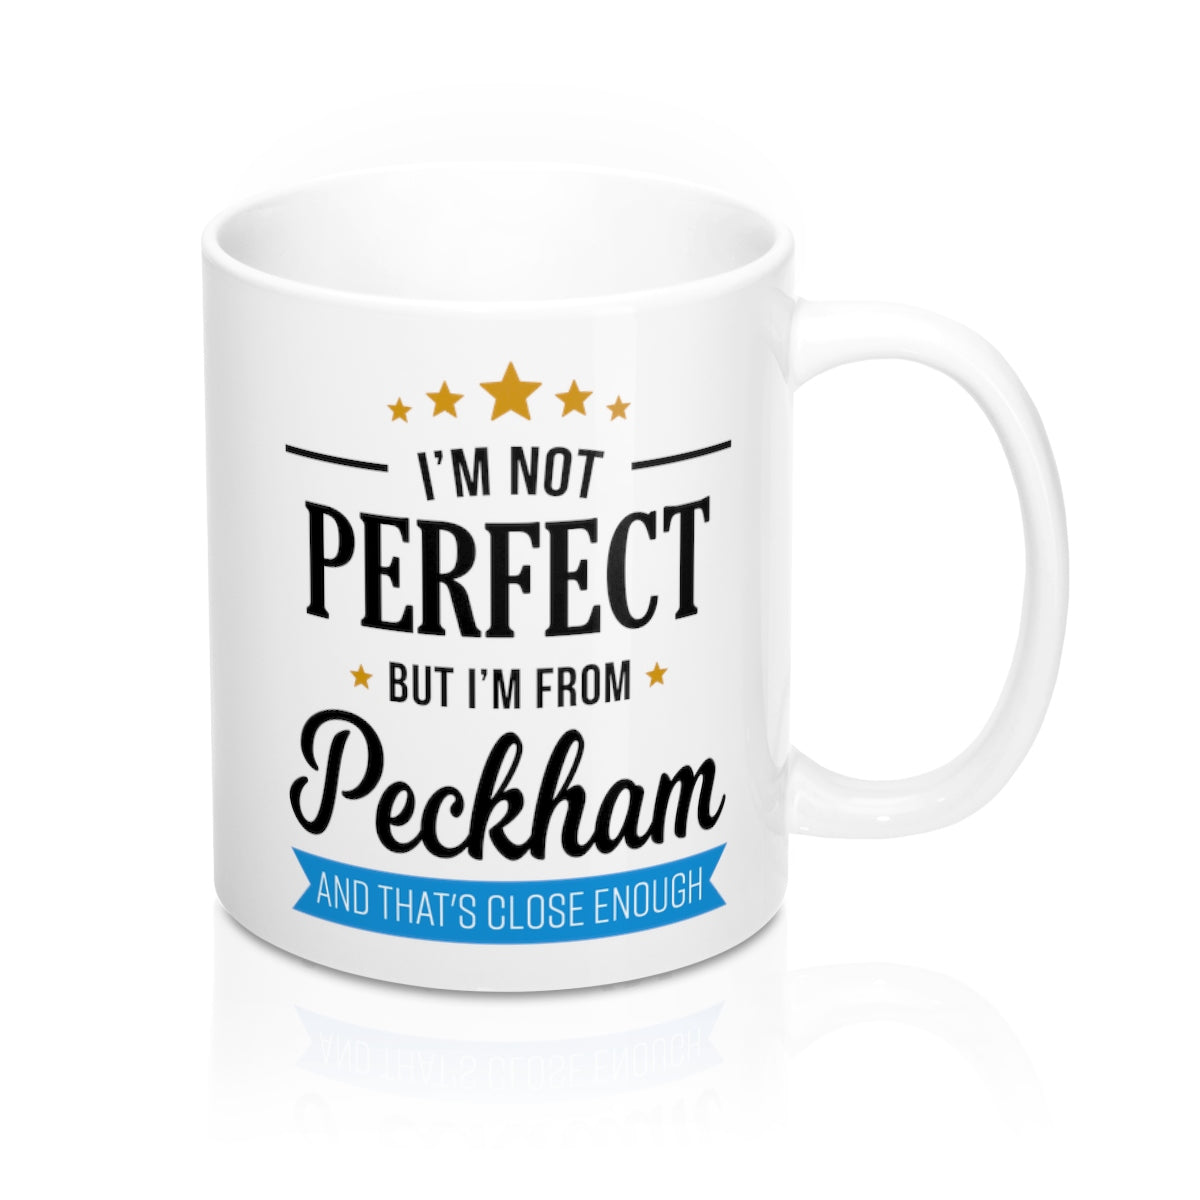 I'm Not Perfect But I'm From Peckham Mug